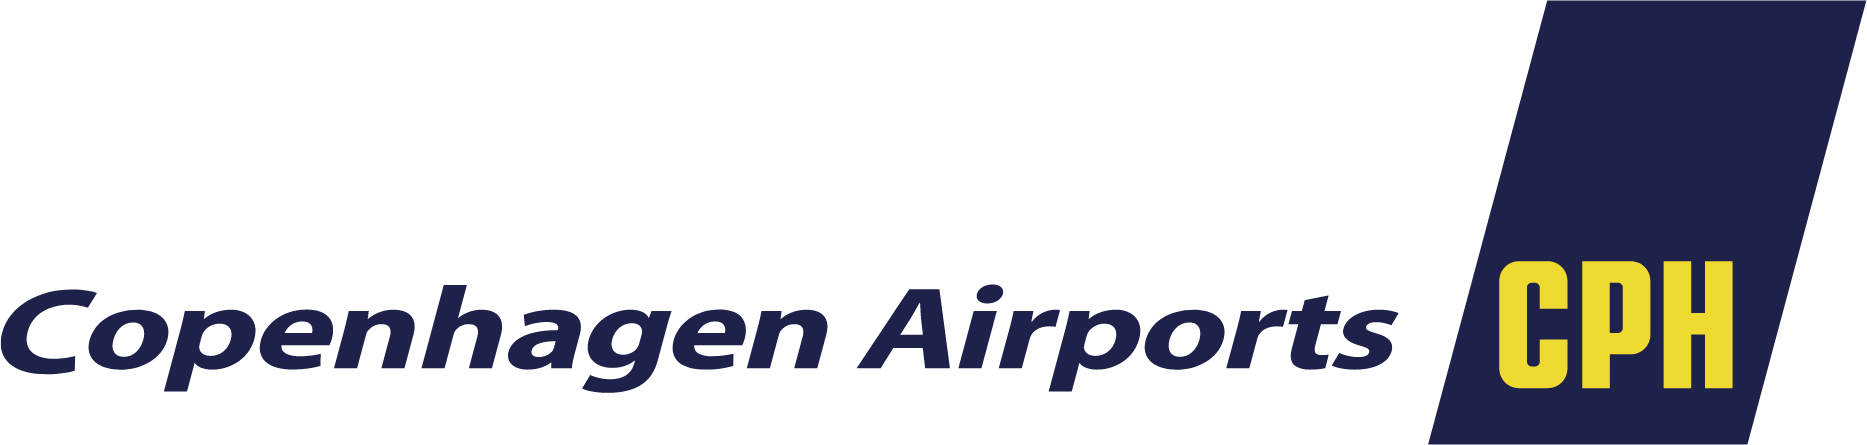 Copenhagen Airport logo large (transparent PNG)